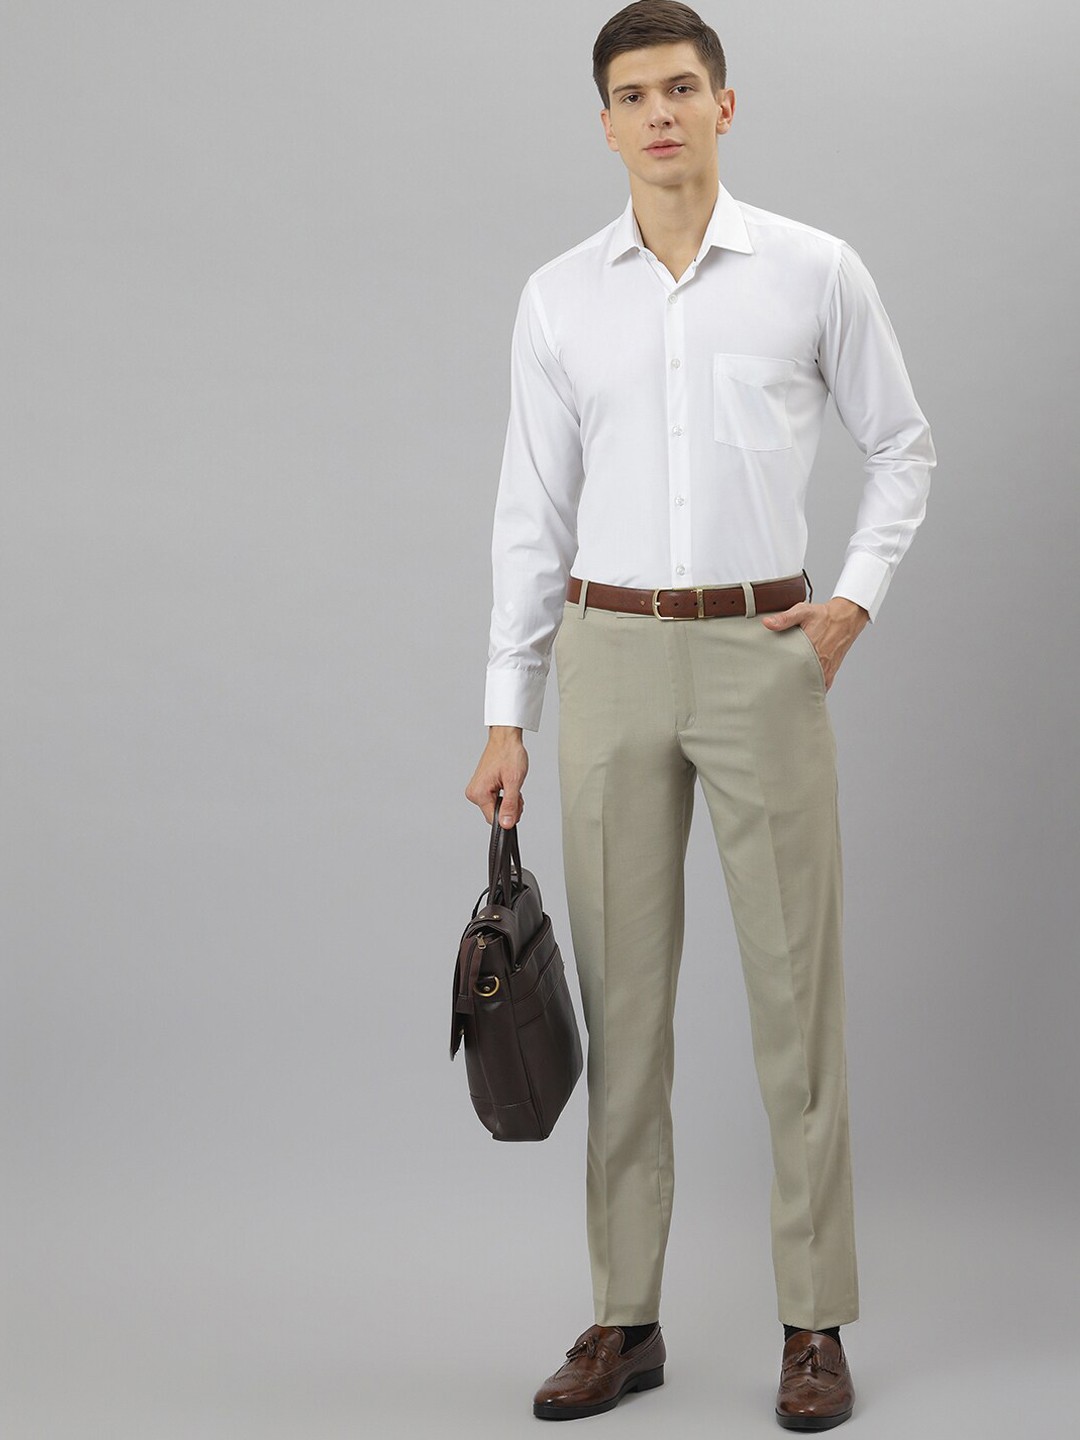 Richlook- Men White Opaque Cotton Formal Shirt